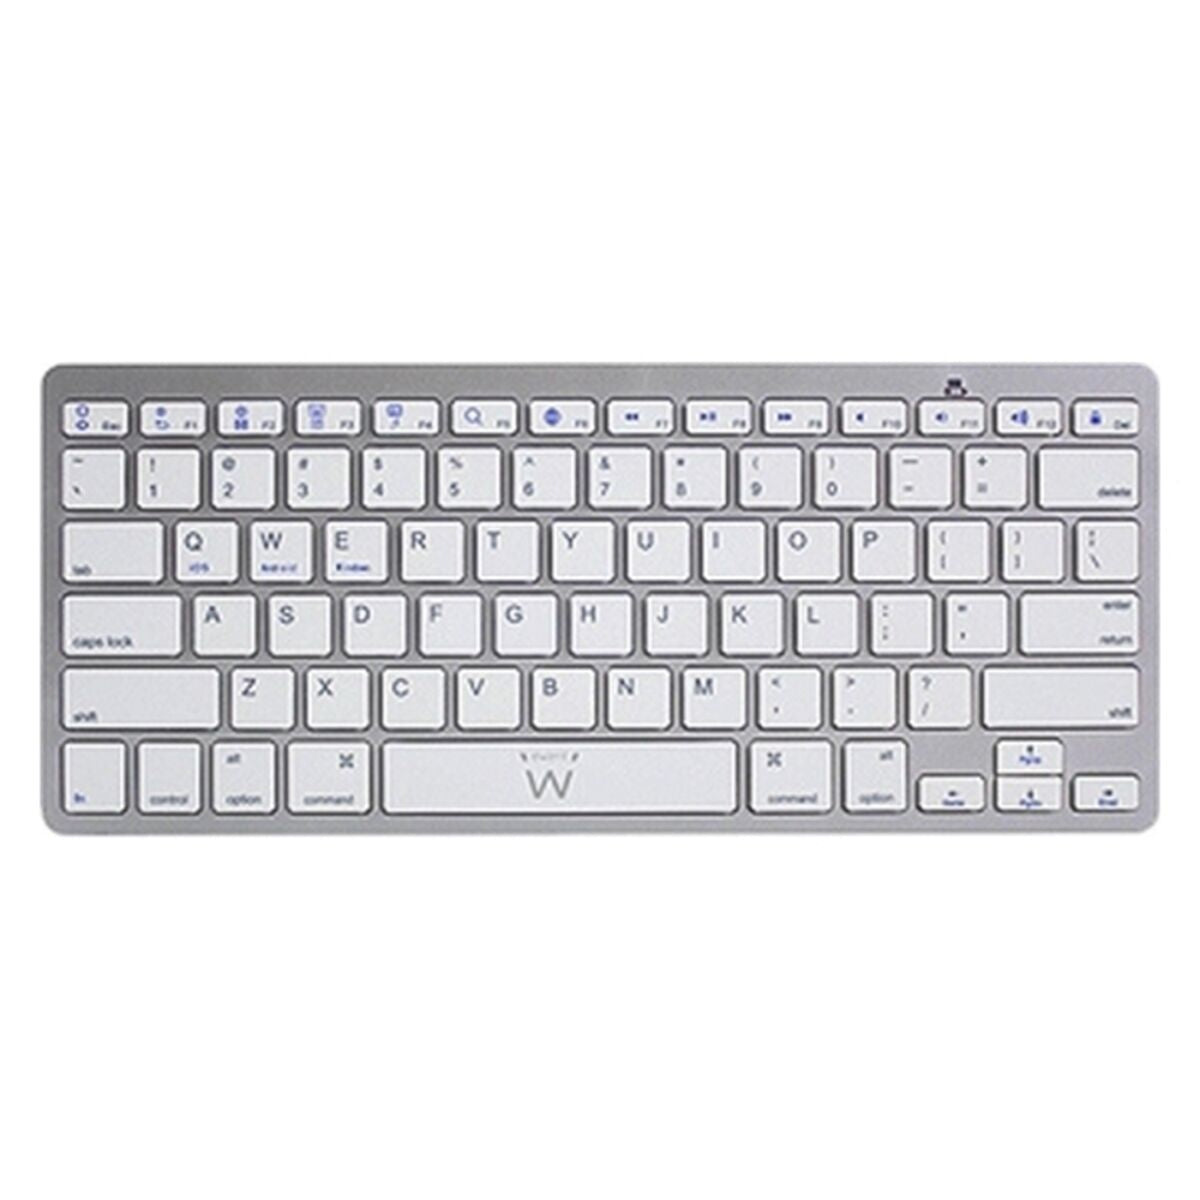 Bluetooth-Tastatur Ewent EW3161 Weiß Silberfarben - CA International  